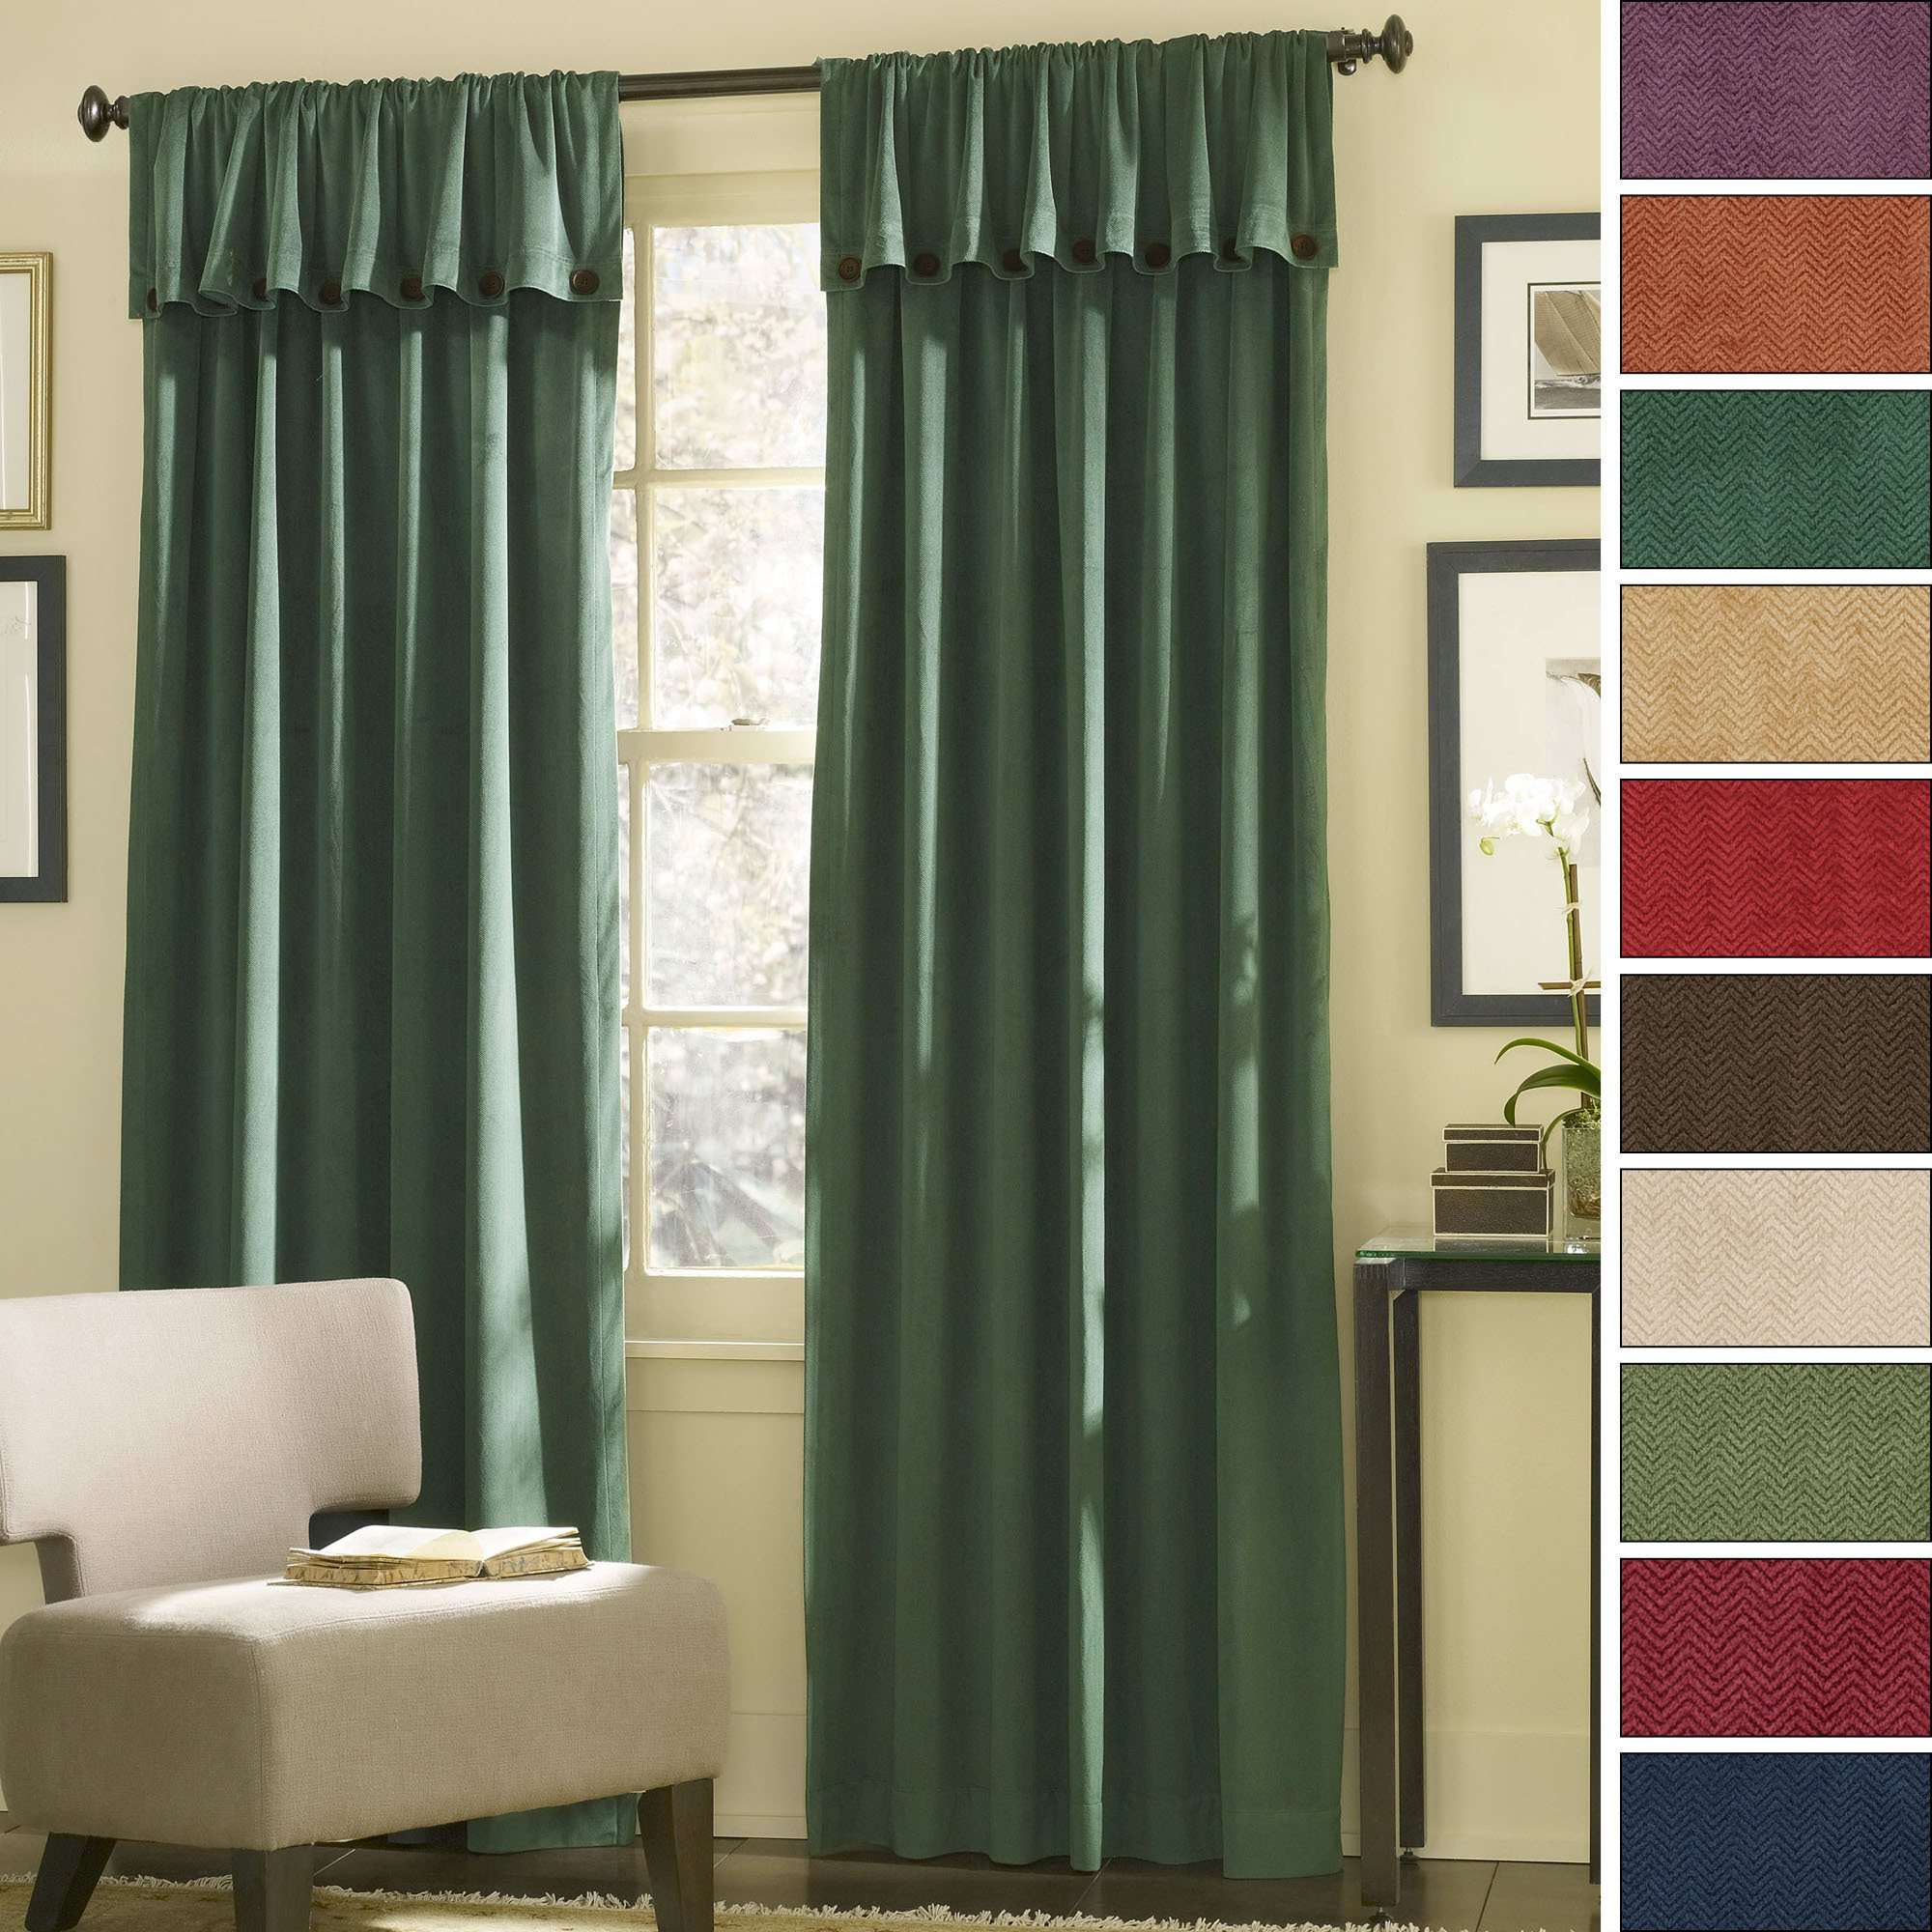 Choosing Top Patio Door Curtains Design Ideas